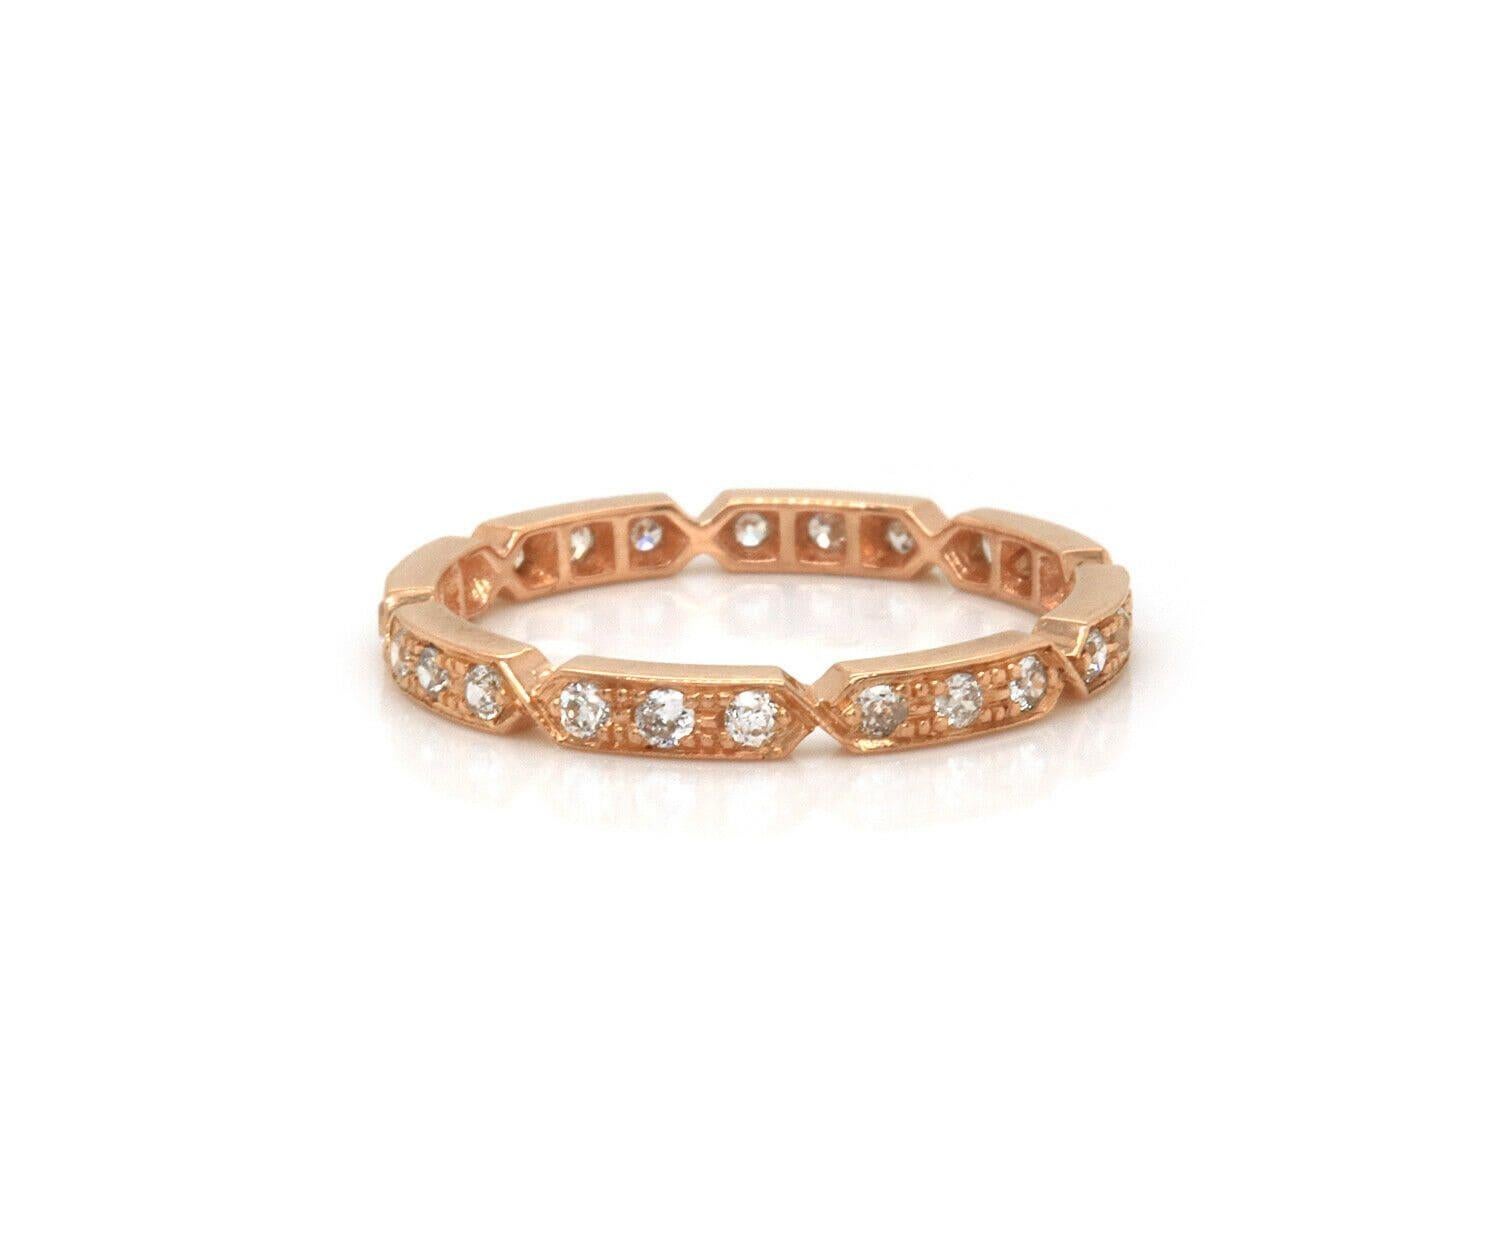 0.20ctw Diamond Octagonal Eternity Wedding Band Ring in 14K

Diamond Octagonal Eternity Wedding Band Ring
14K Rose Gold
Diamonds Carat Weight: Approx. 0.20ctw
Band Width: Approx. 2.10 MM
Ring Size: 6.0 (US)
Weight: Approx. 1.70